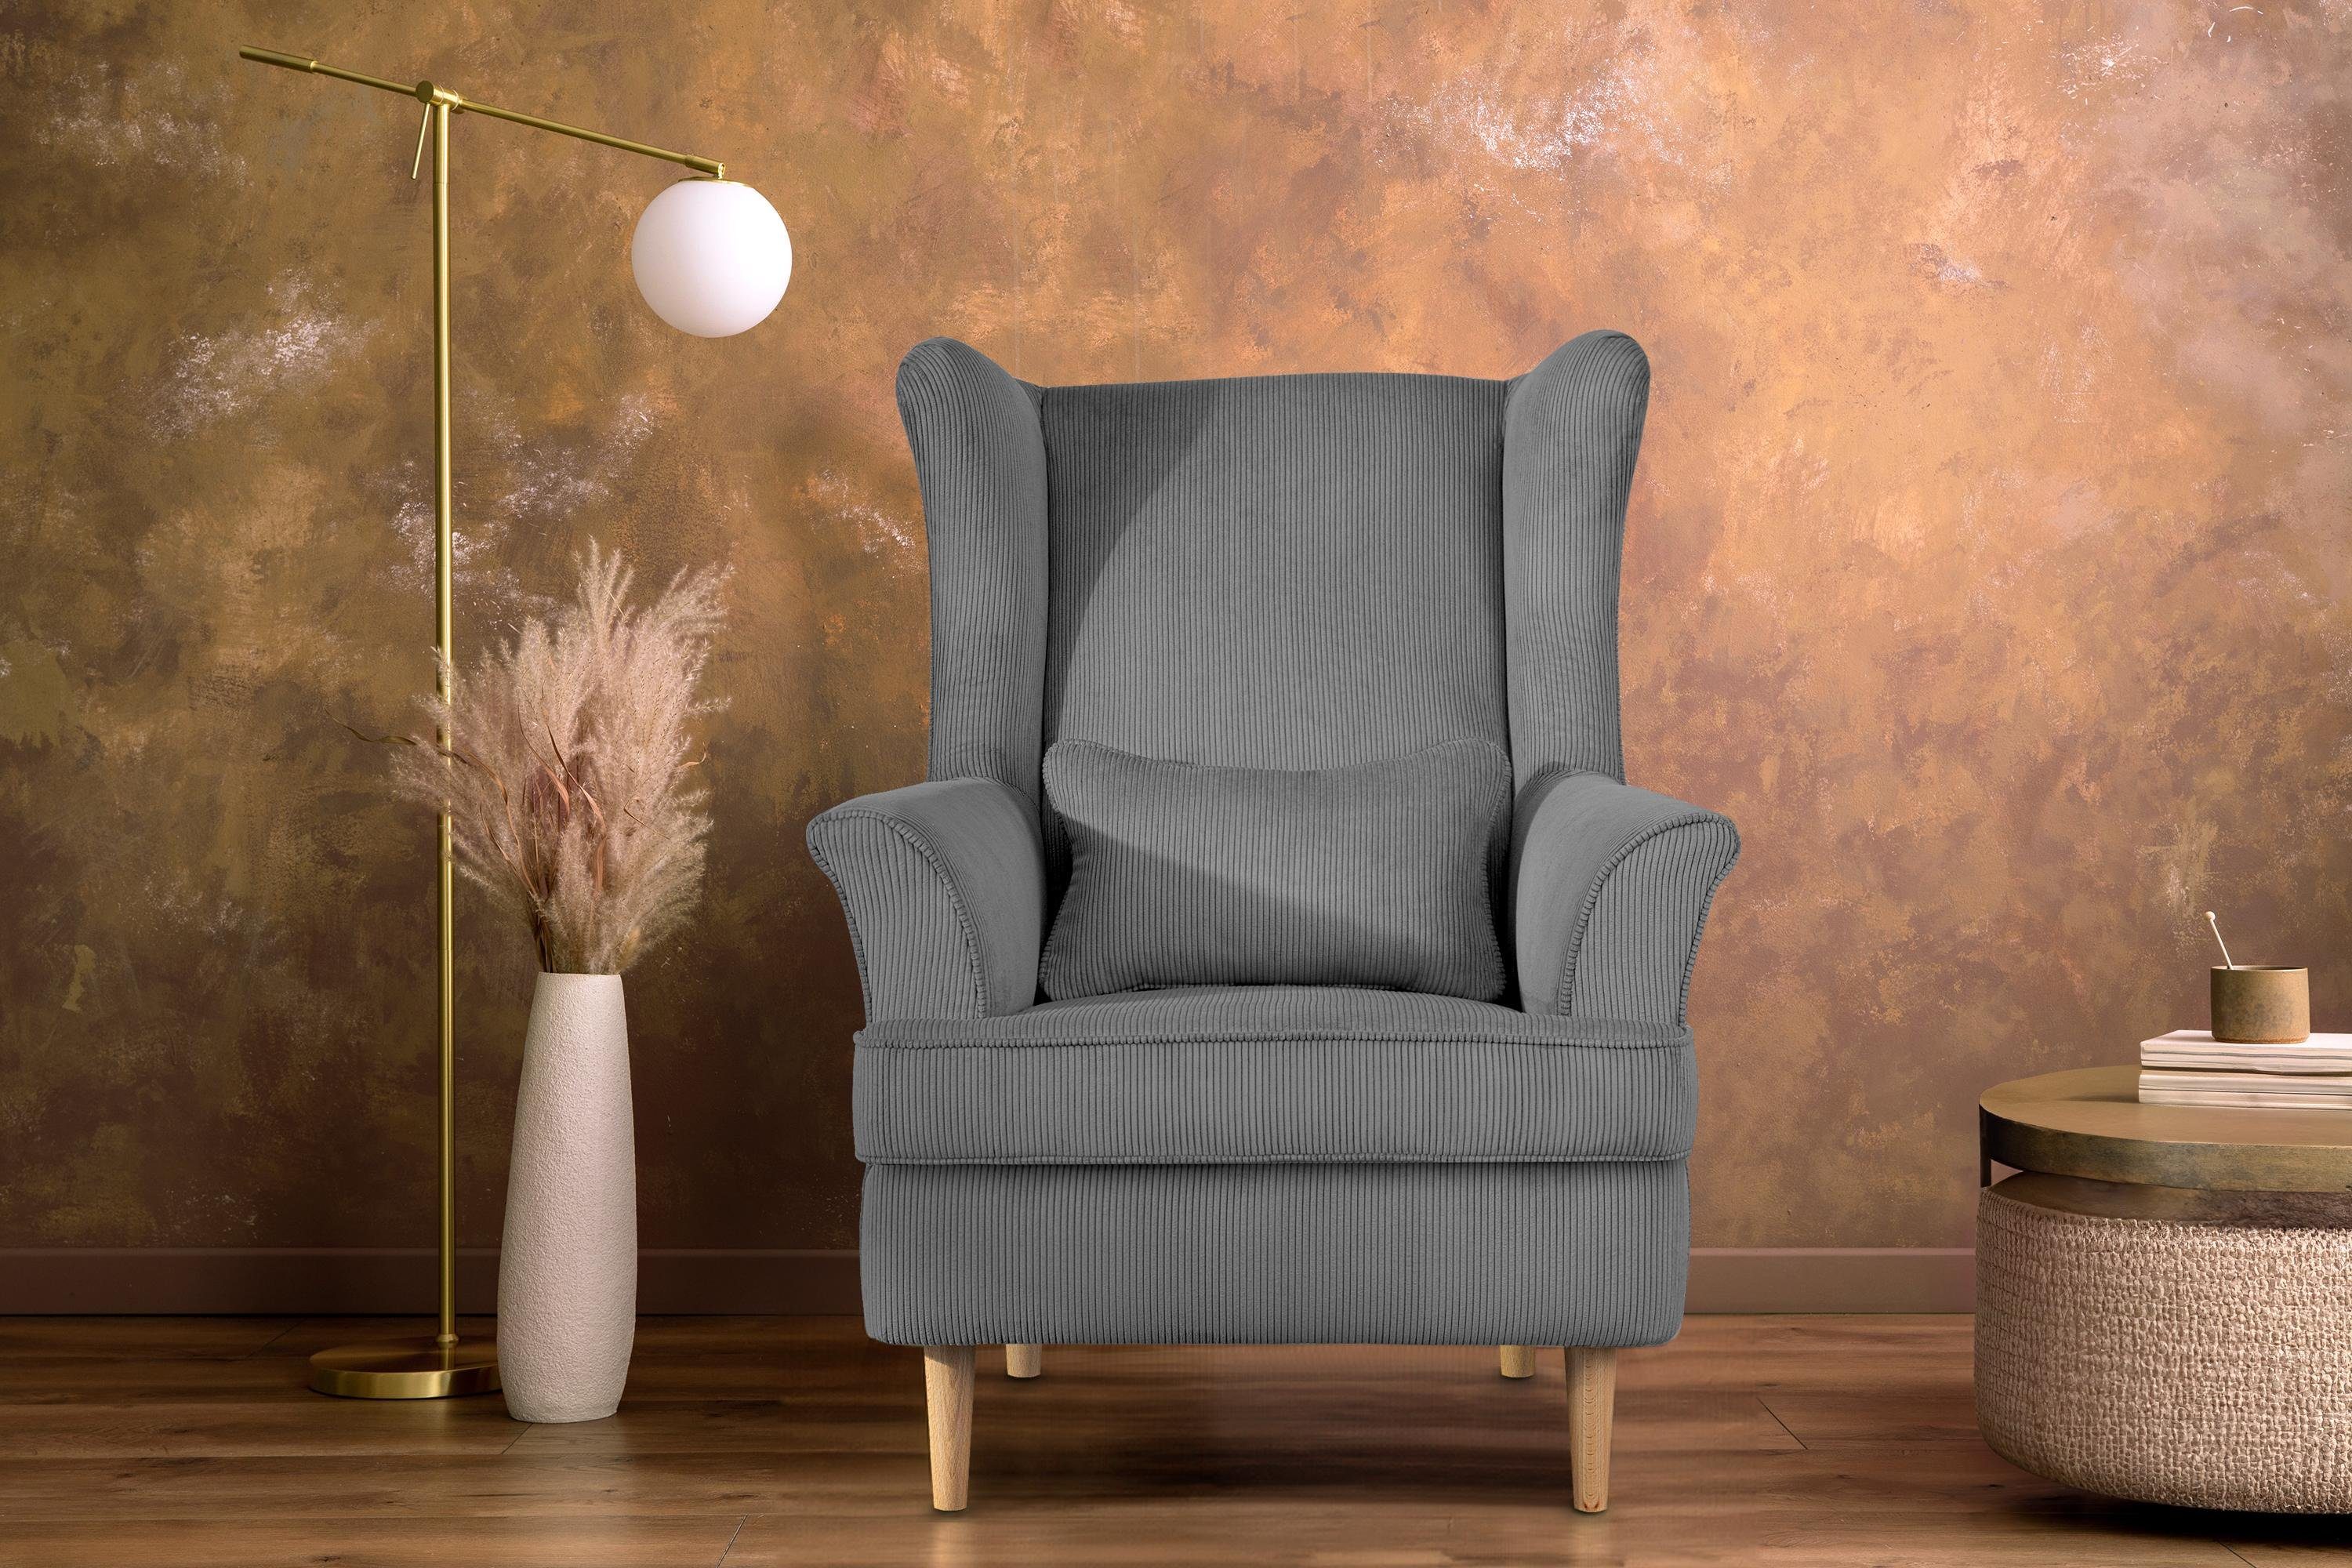 Sessel, hohe Ohrensessel inklusive Konsimo STRALIS Füße, Design, dekorativem zeitloses Kissen